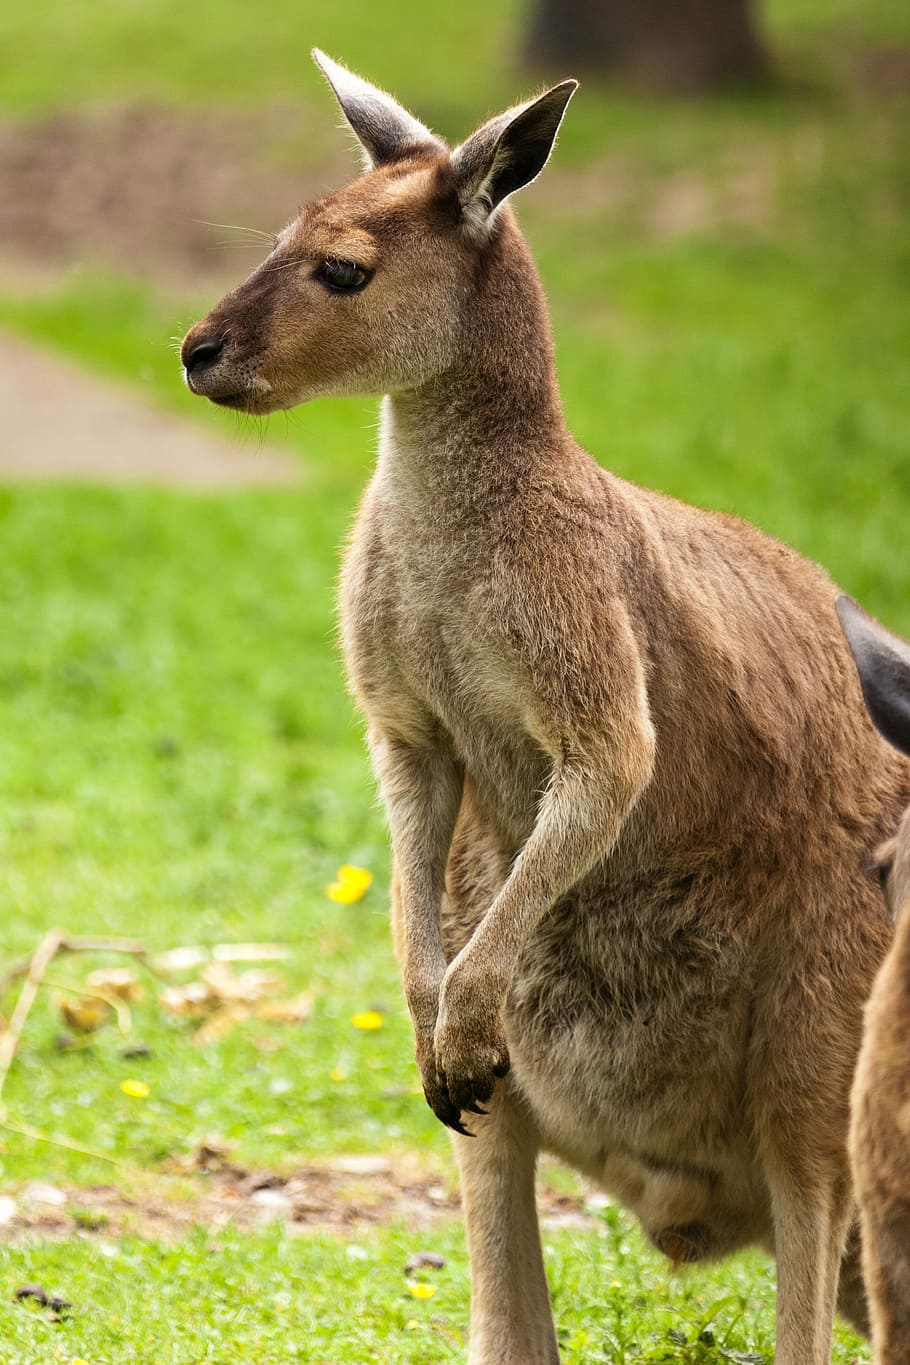 kanguru, berdiri, bidang rumput, Hewan, Australia, Brown, telinga, fauna, bulu, hop